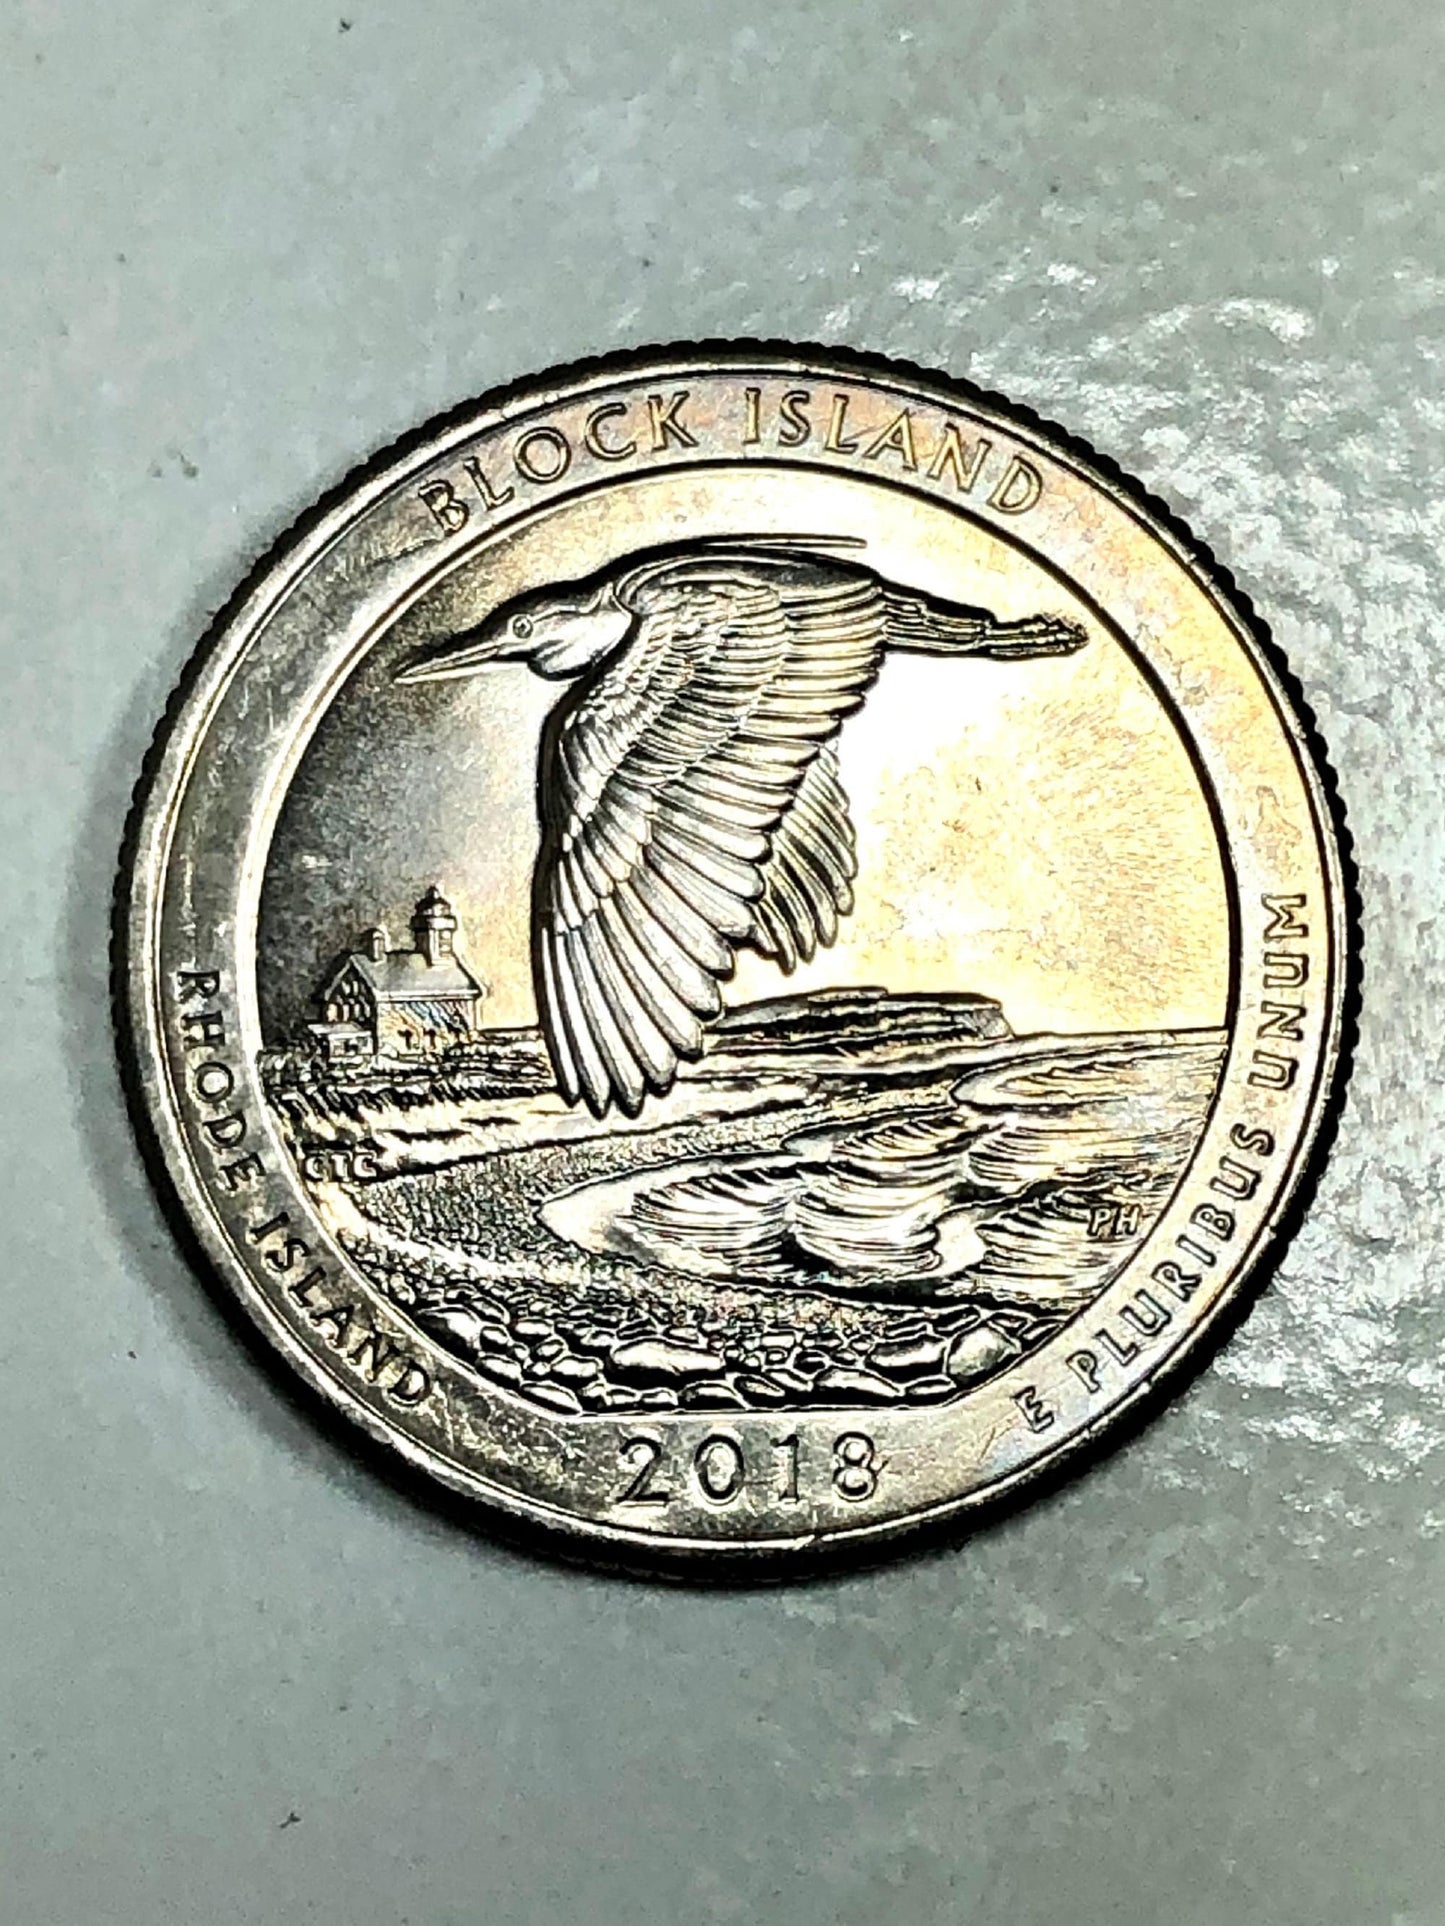 USA Ring Rhode Island Block Island National Wildlife Refuge Coin Ring